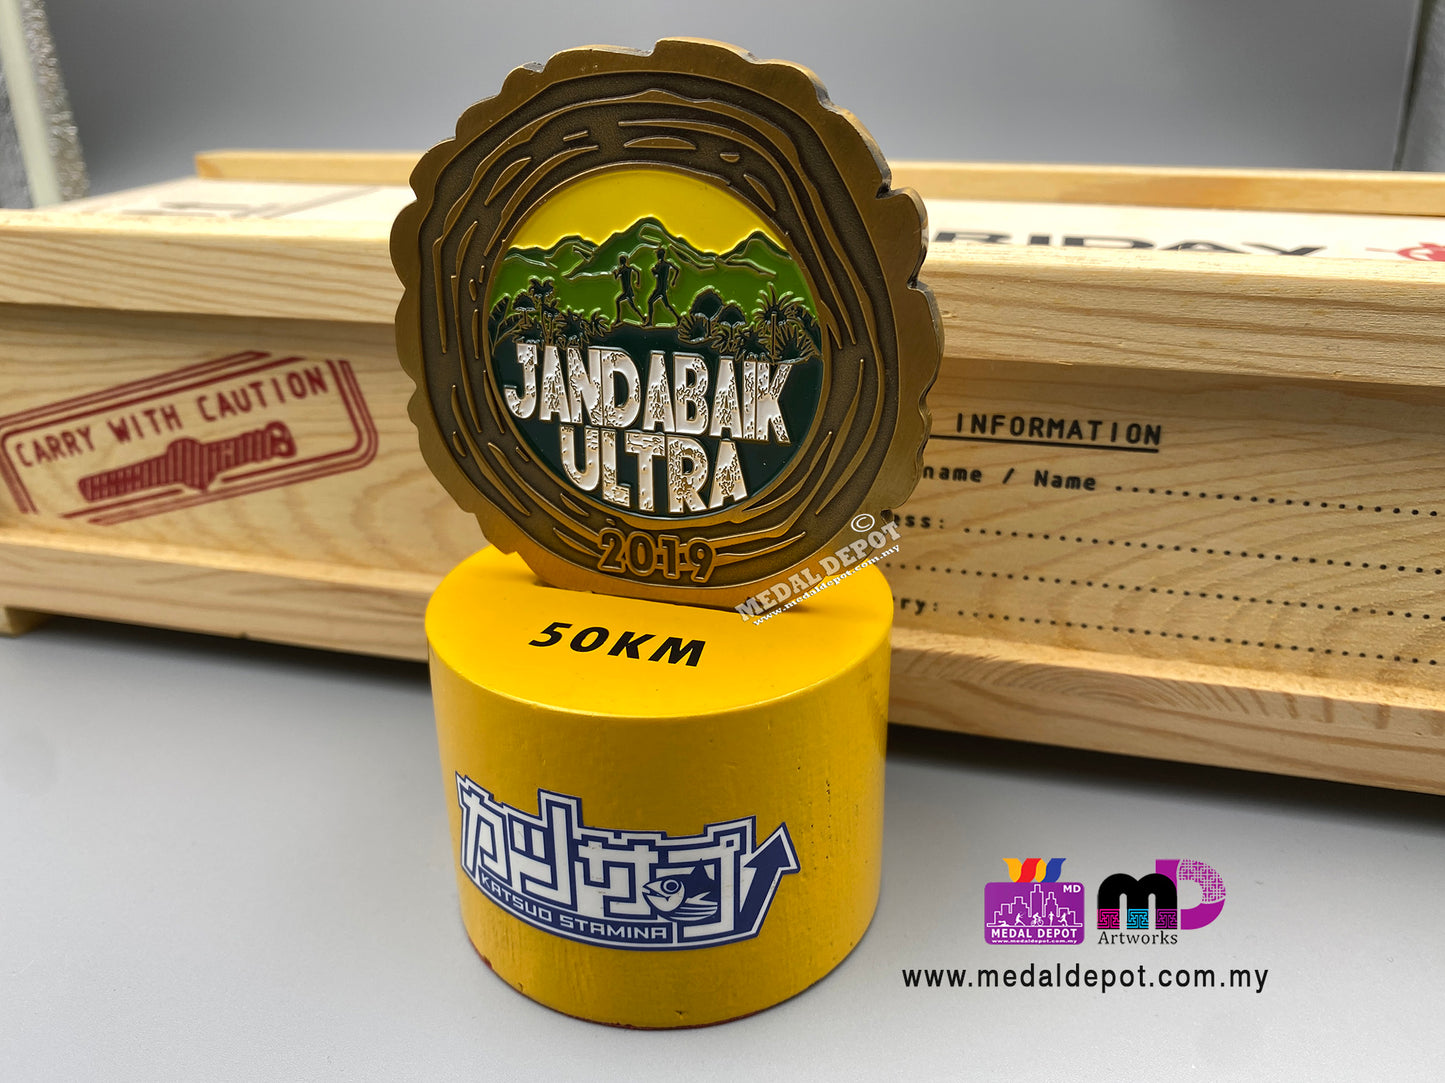 Janda Baik Ultra 2019 Trophy